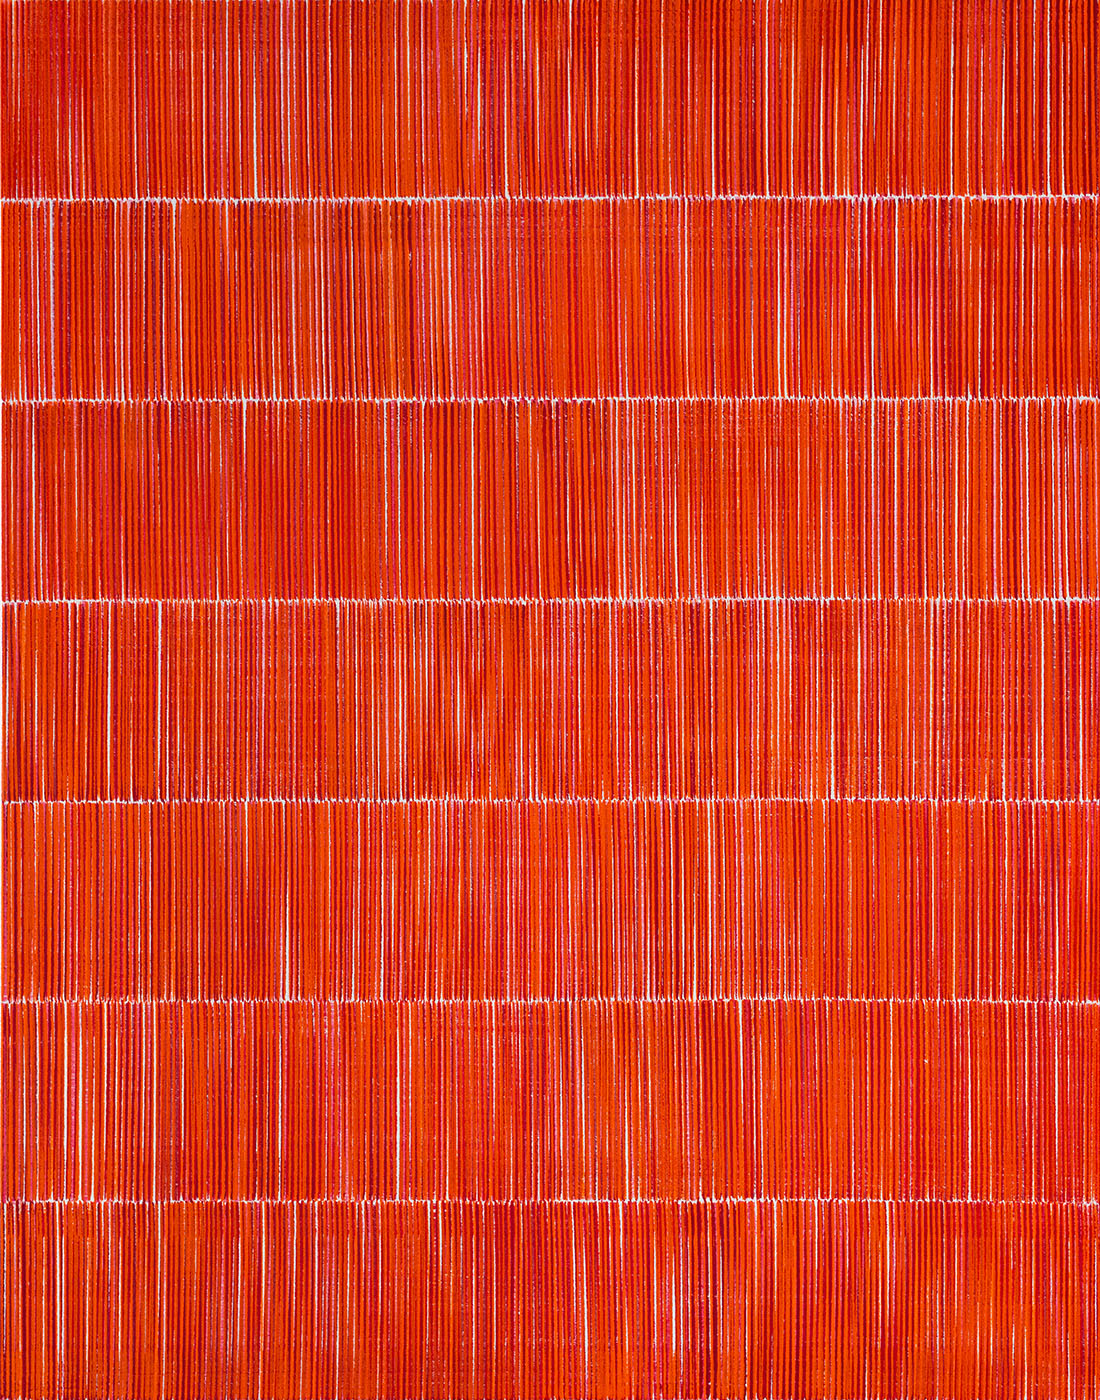 Nikola Dimitrov, KlangRaumOrange II, 2020, Pigmente, Bindemittel auf Leinwand, 140 x 110 cm